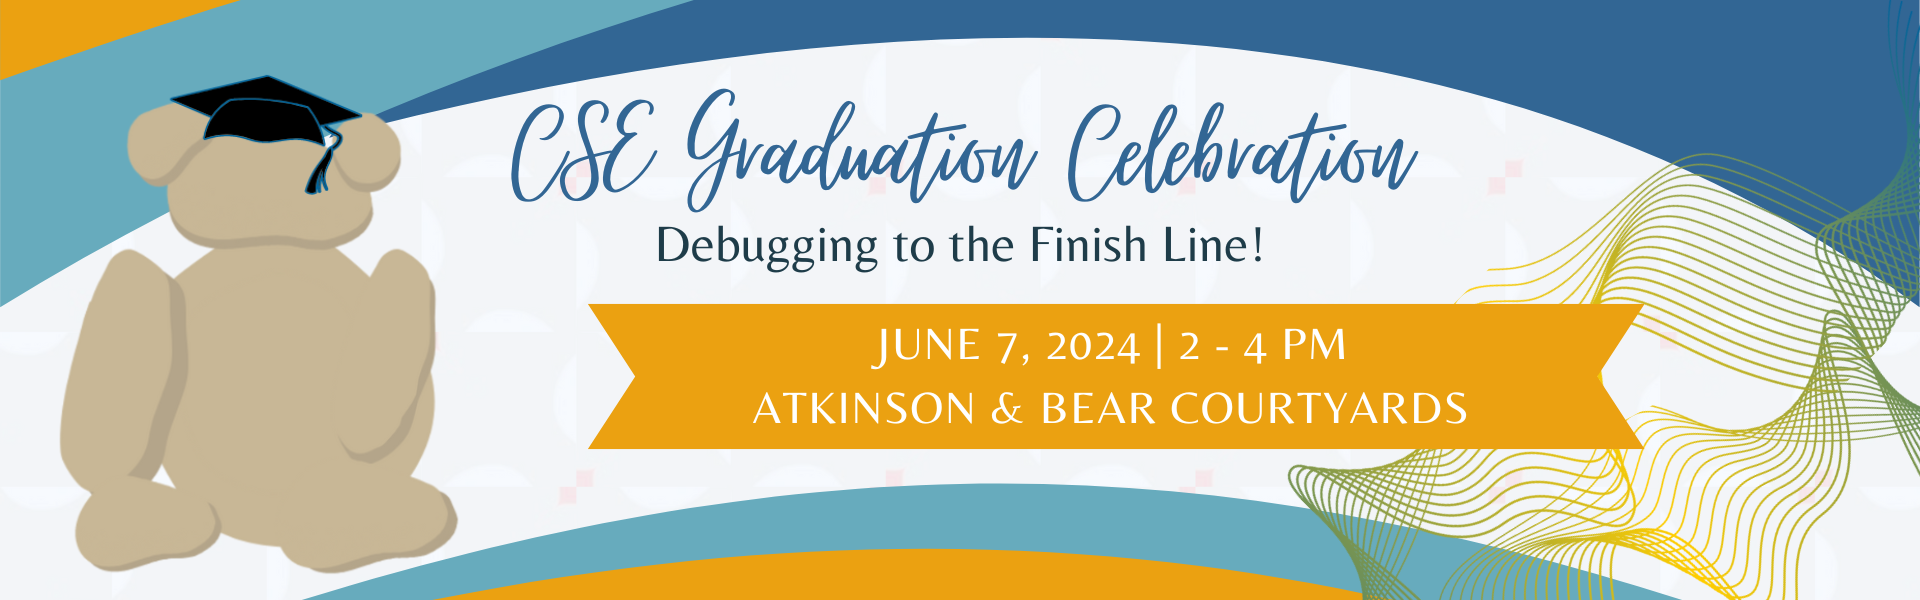 CSE Graduation Celebration on June 7, 2024 from 2-4pm